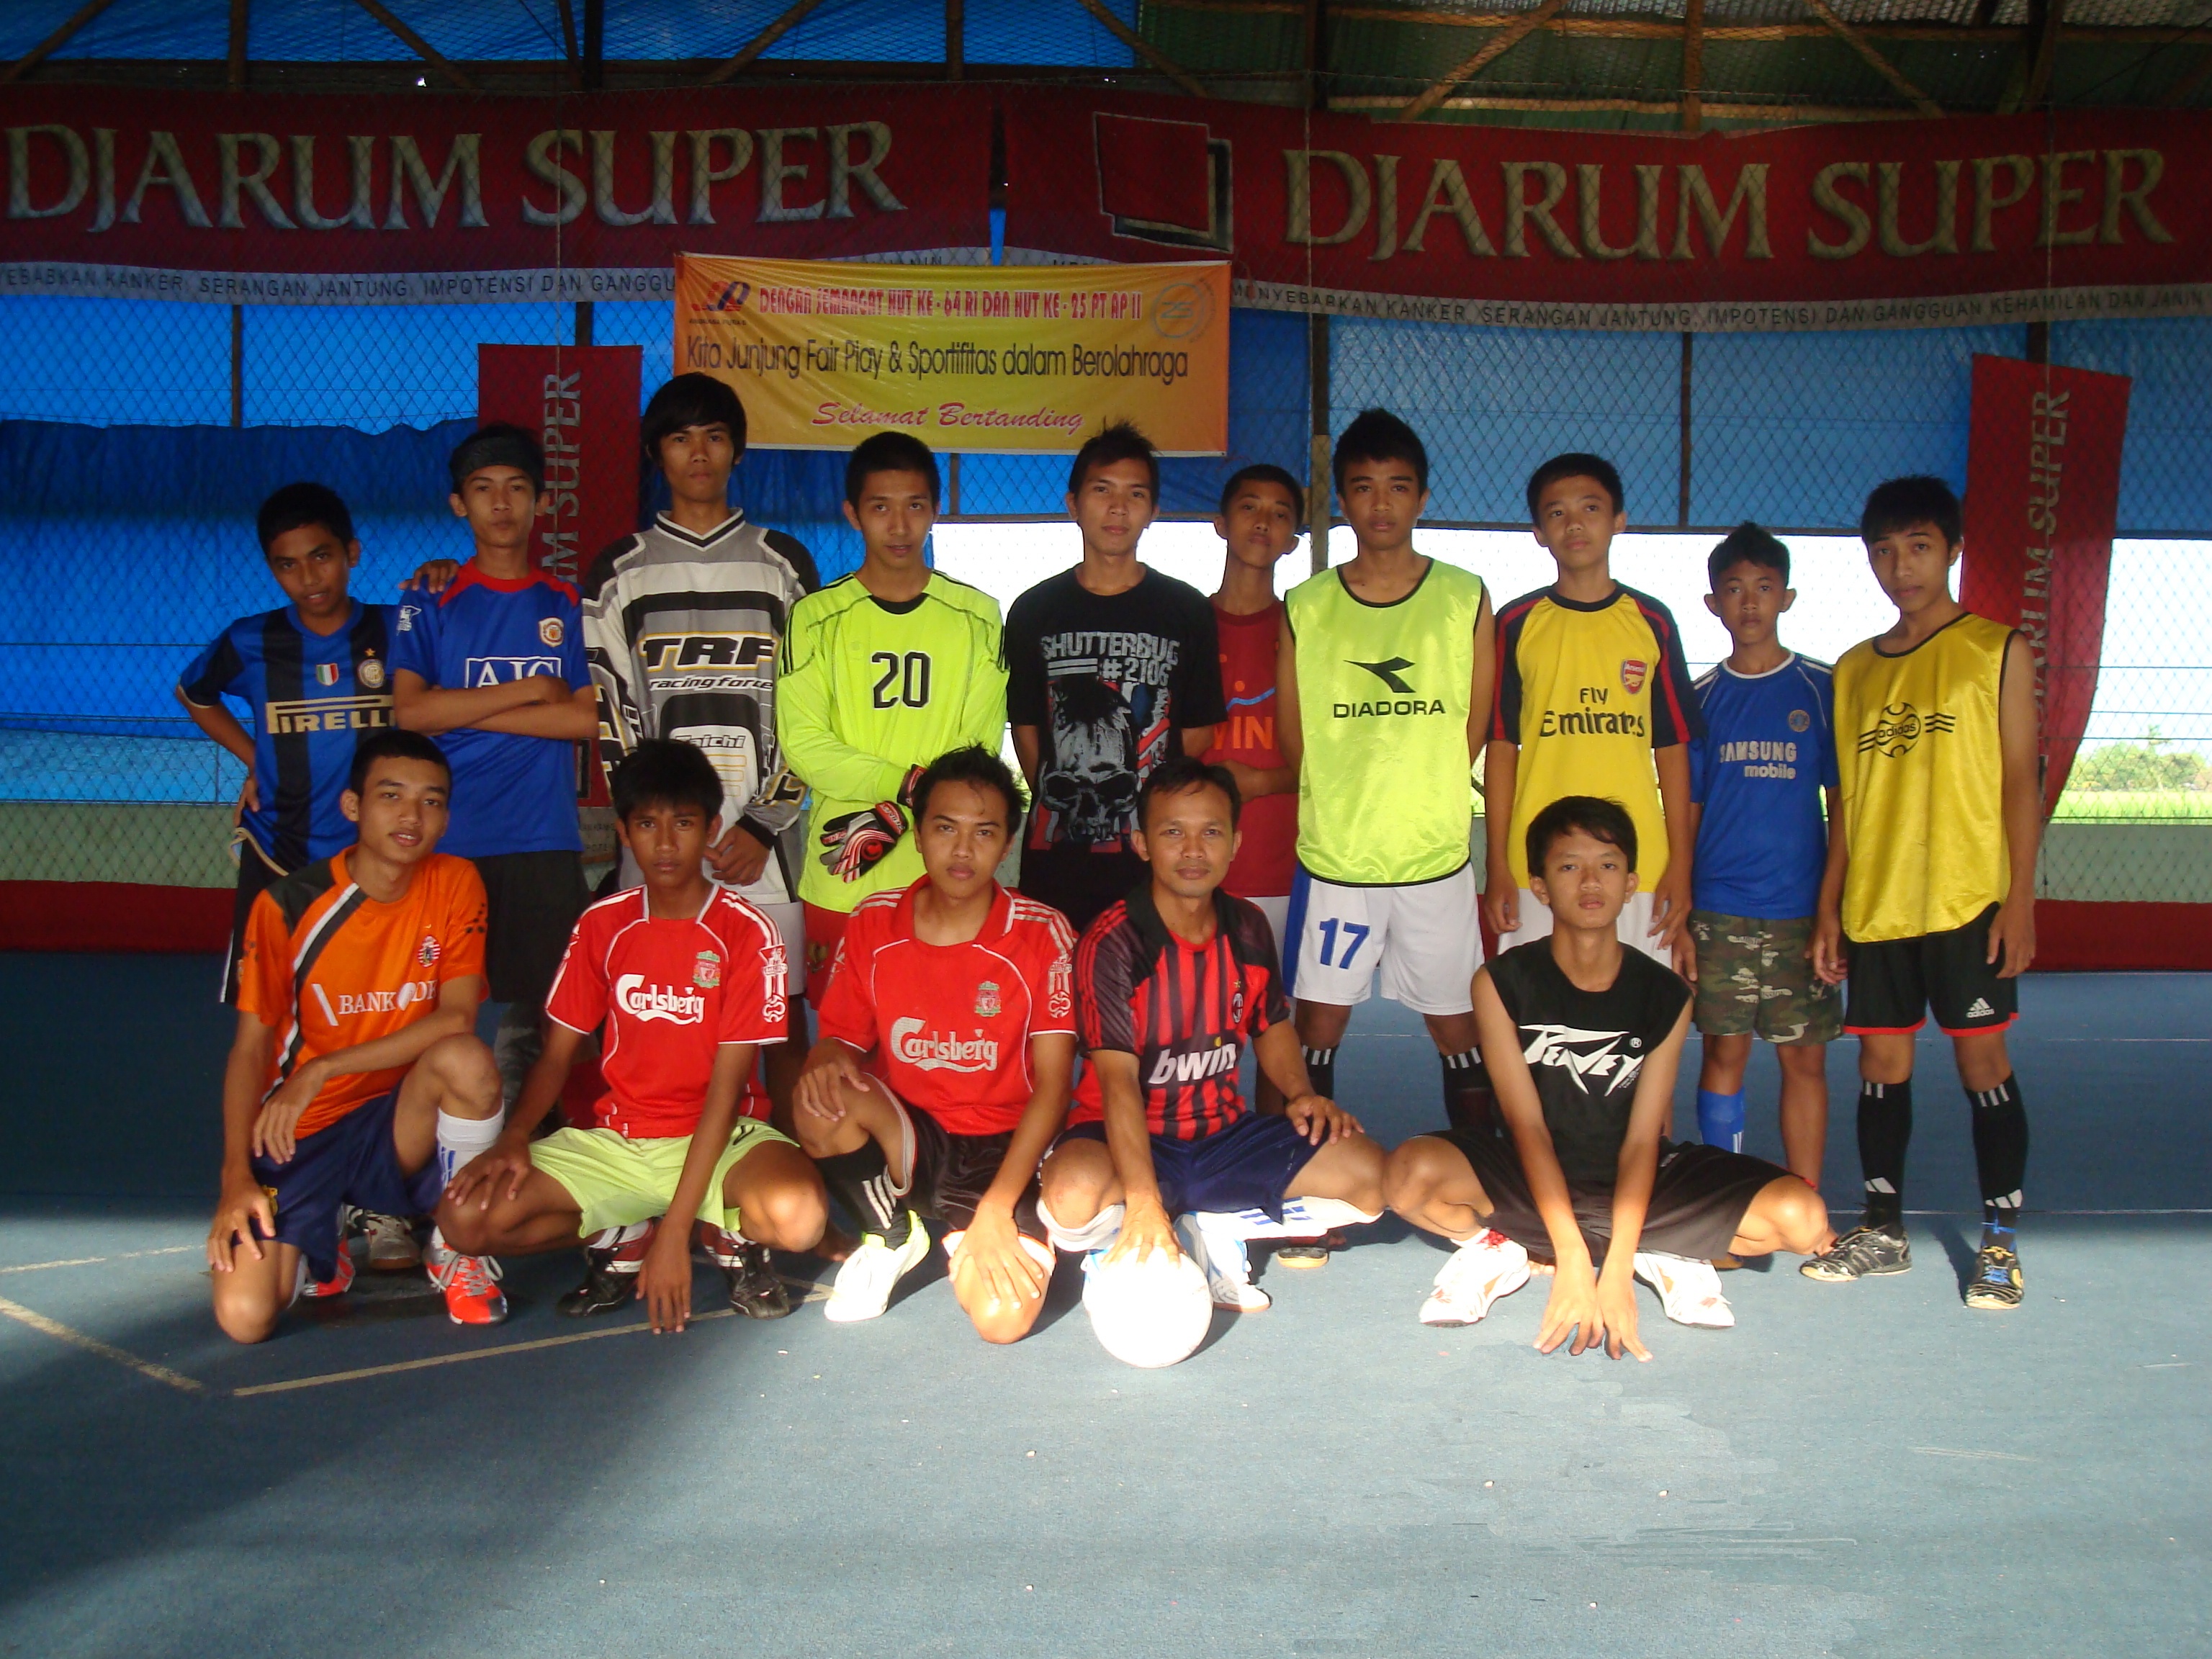 Foto Kemponan Futsal Club